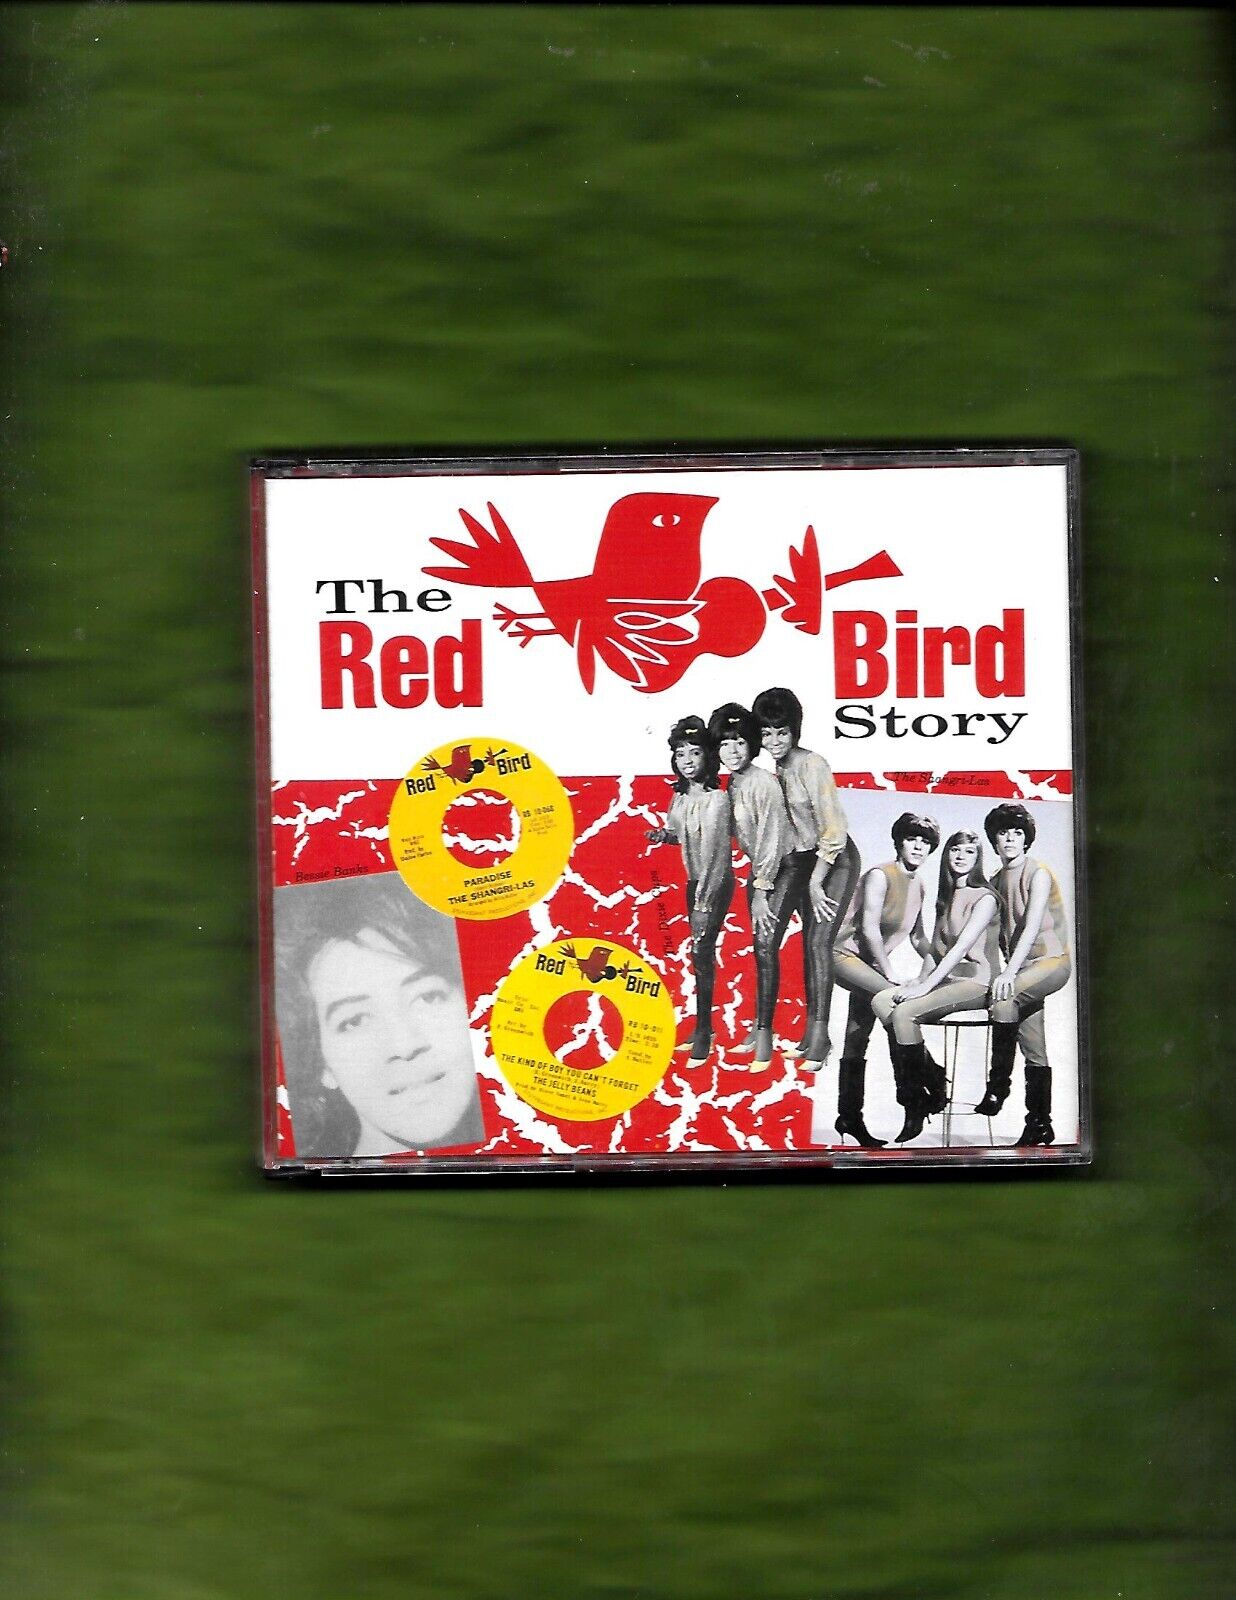 The Red Bird Story Charly 4 CD CD Dixie Cups Shangri Las Dee Dee Warwick FL